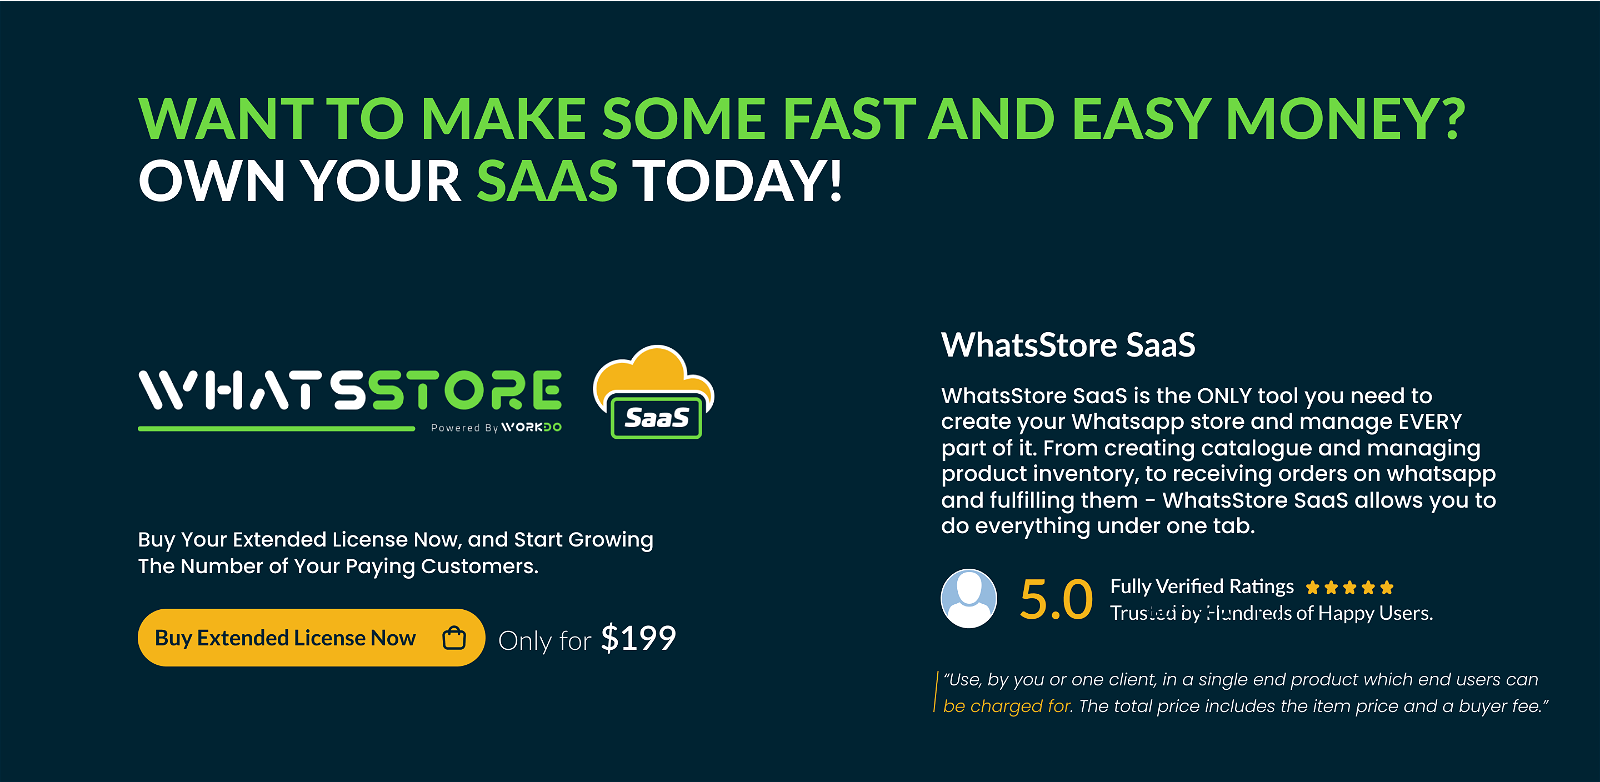 WhatsStore SaaS - Online WhatsApp Store Builder - 9